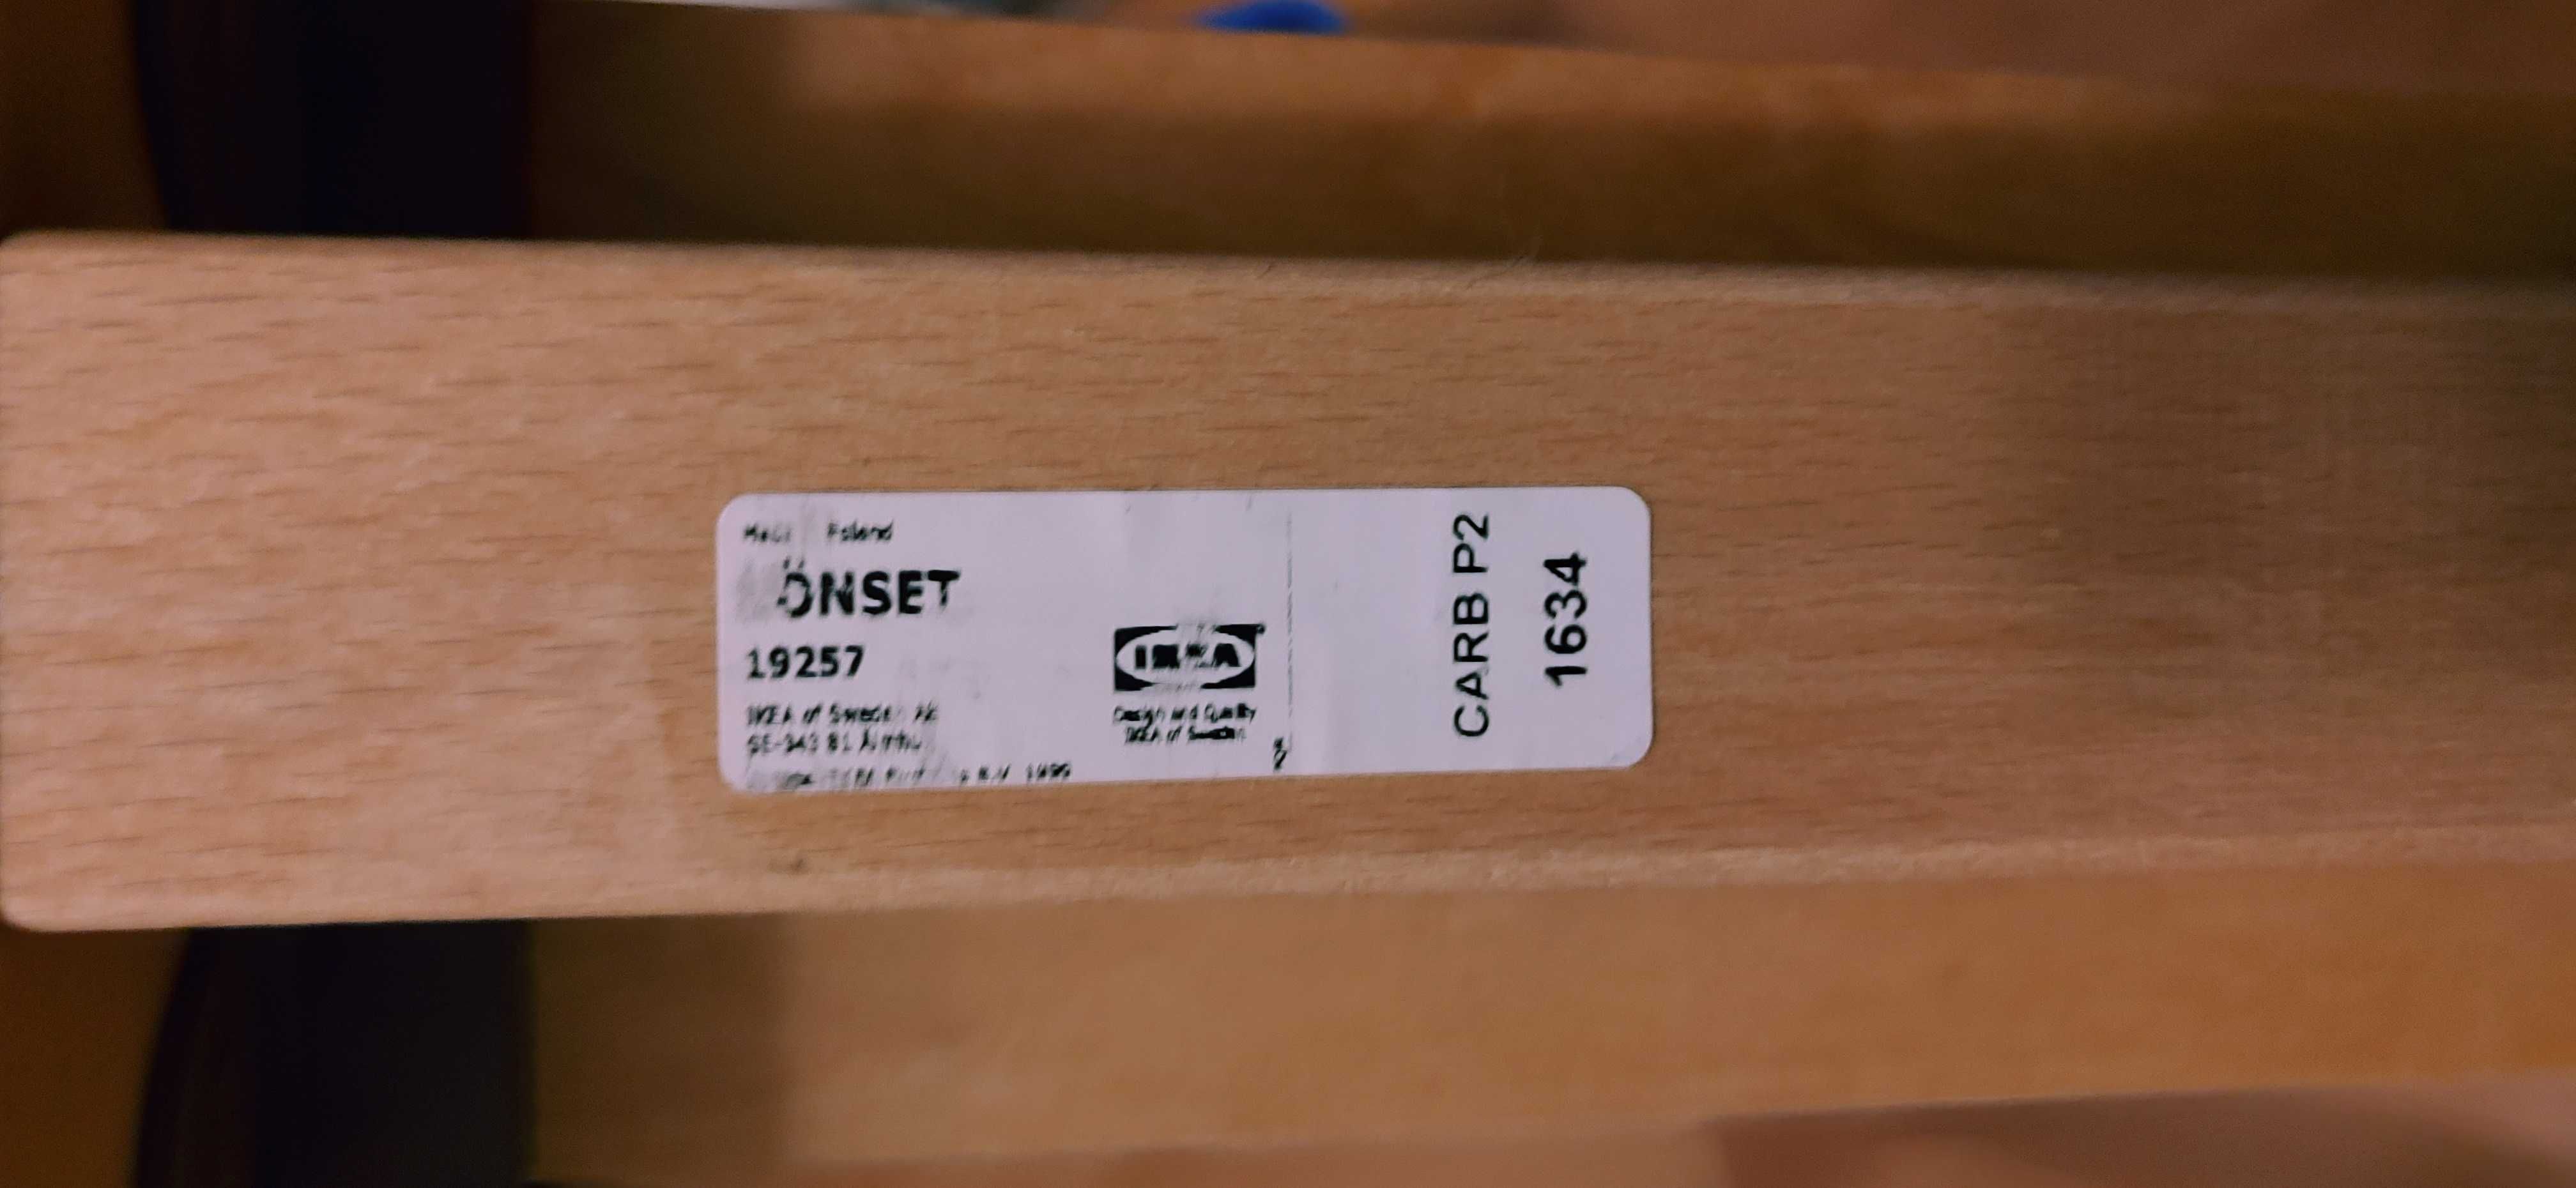 Dno łóżka IKEA LÖNSET 2x 80cm